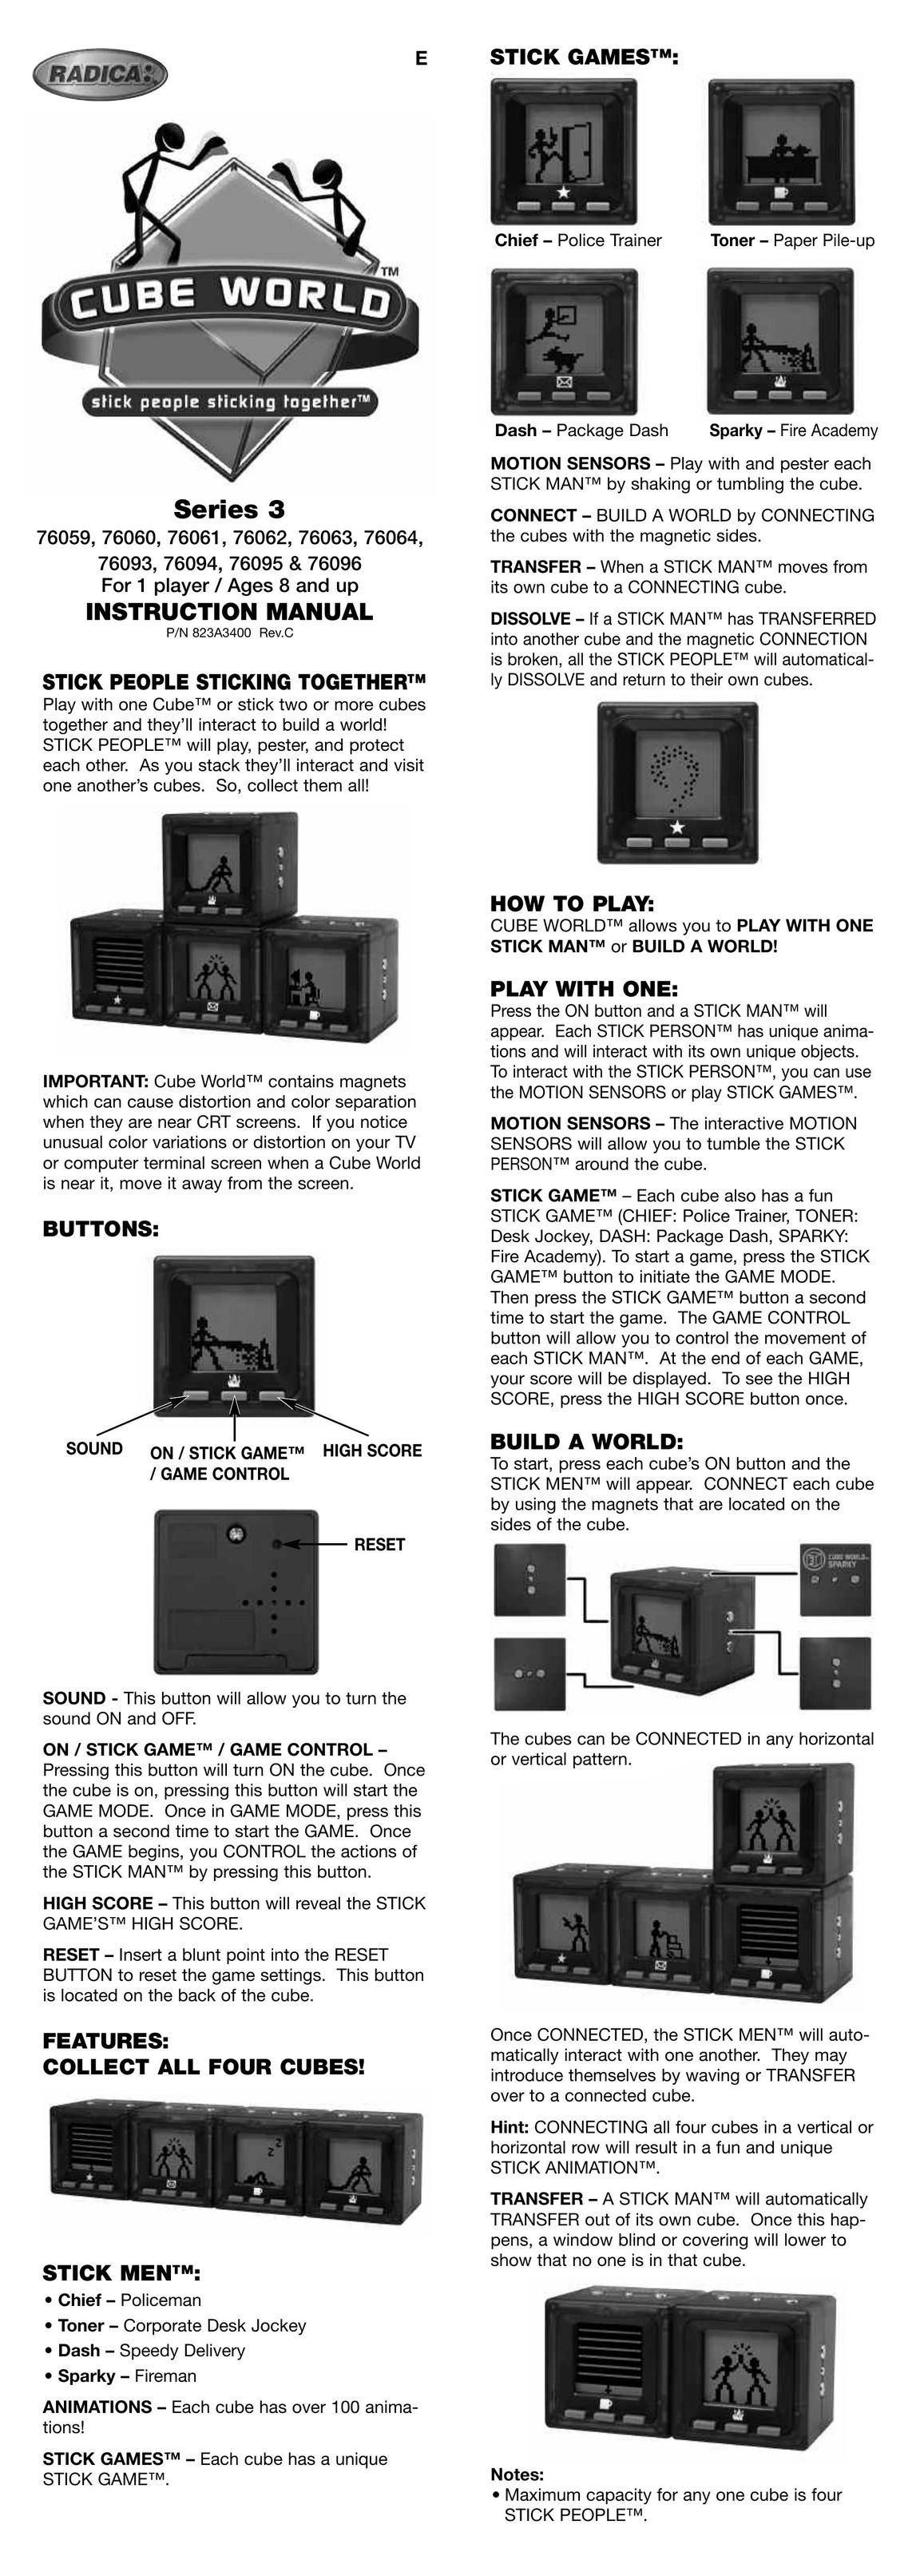 Radica Games 76093 Handheld Game System User Manual